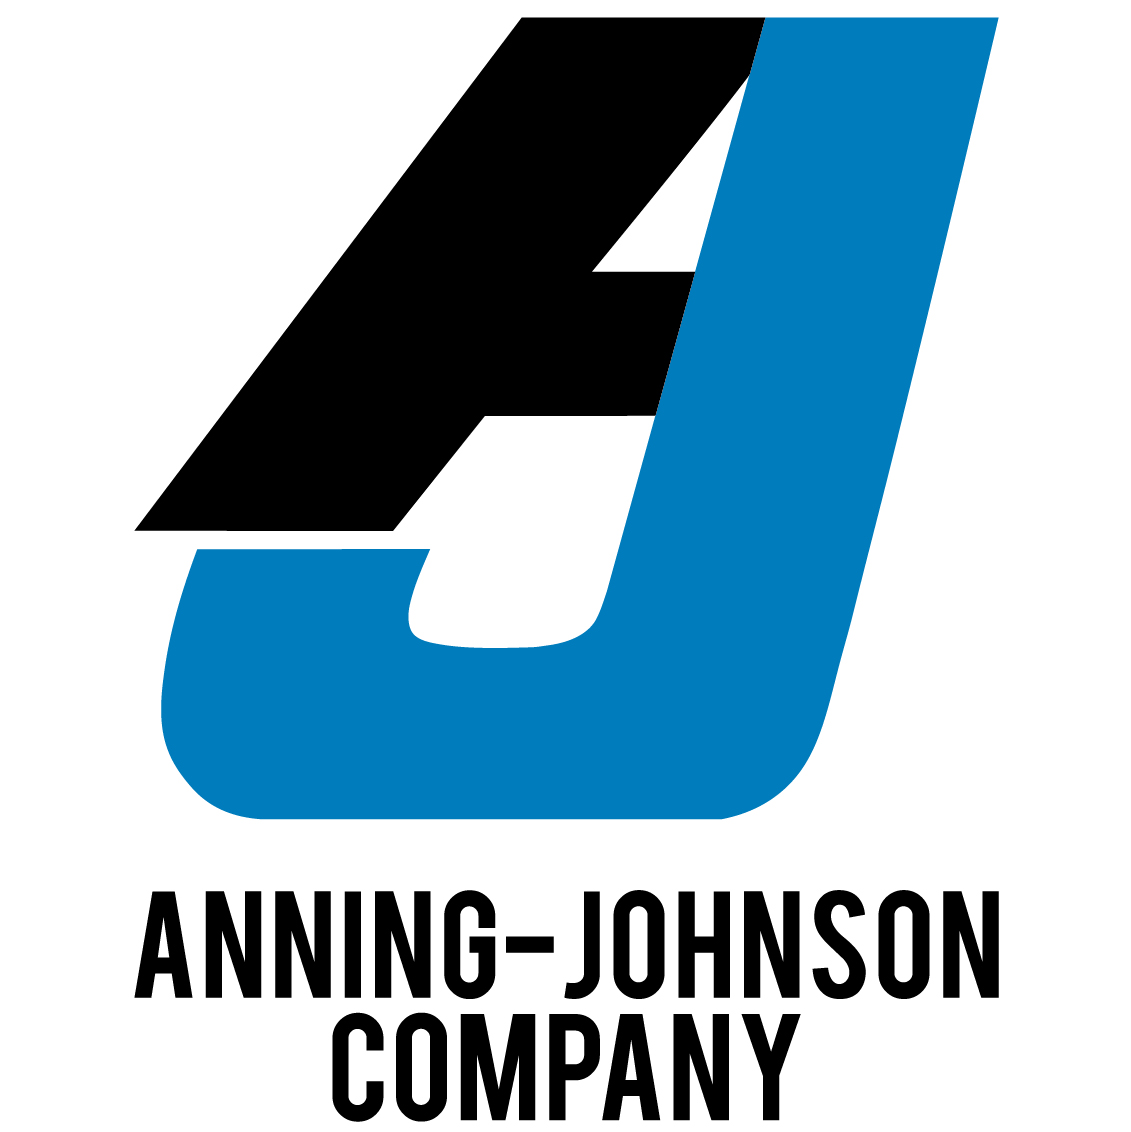 Anning Johnson